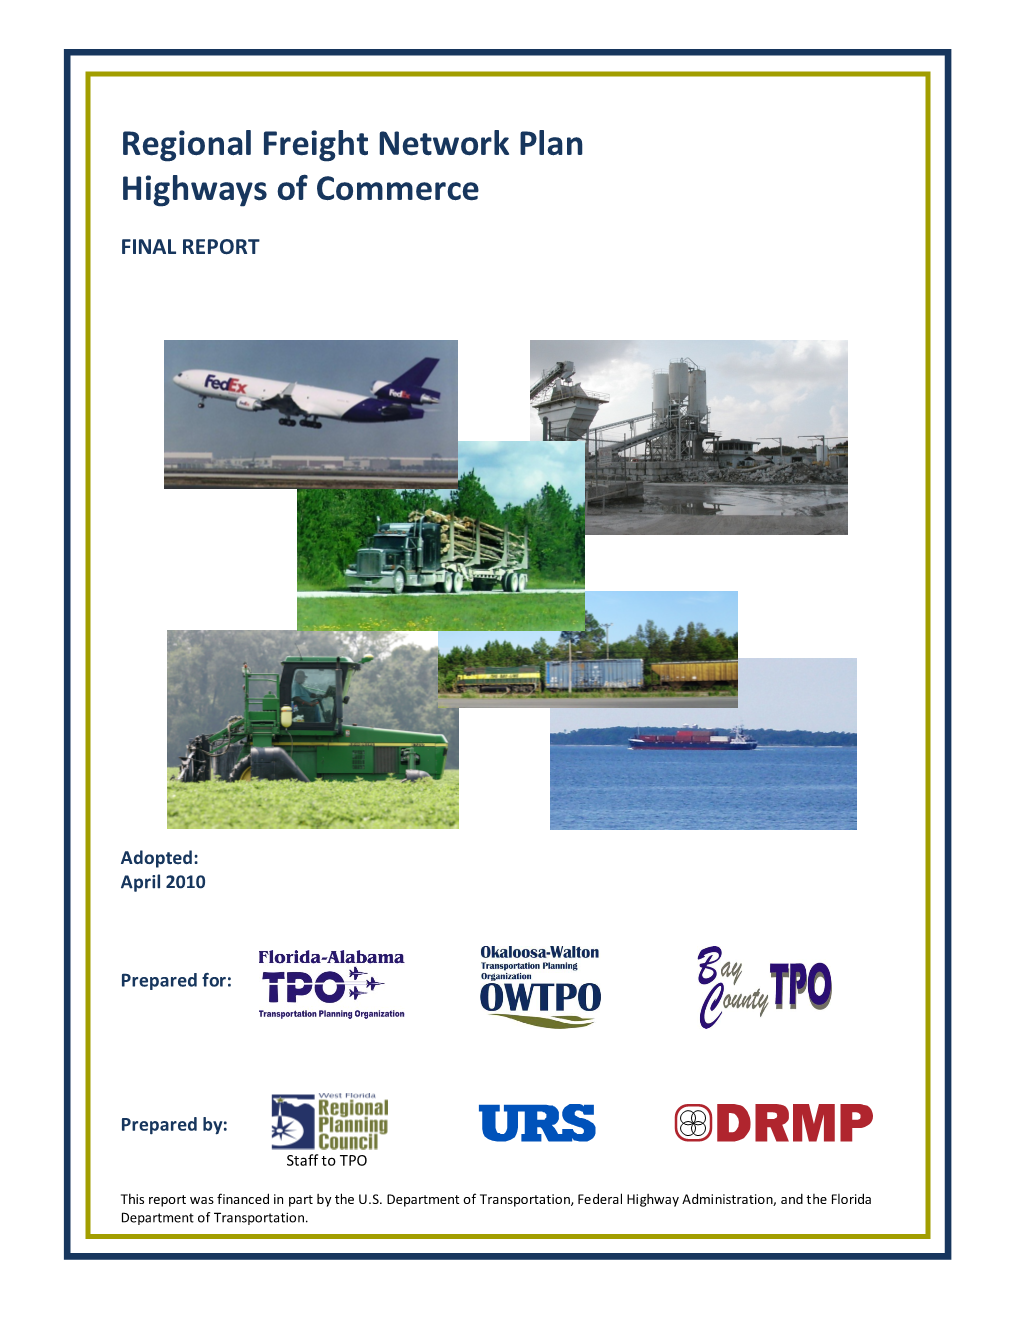 Regional Freight Network Plan Highways of Commerce